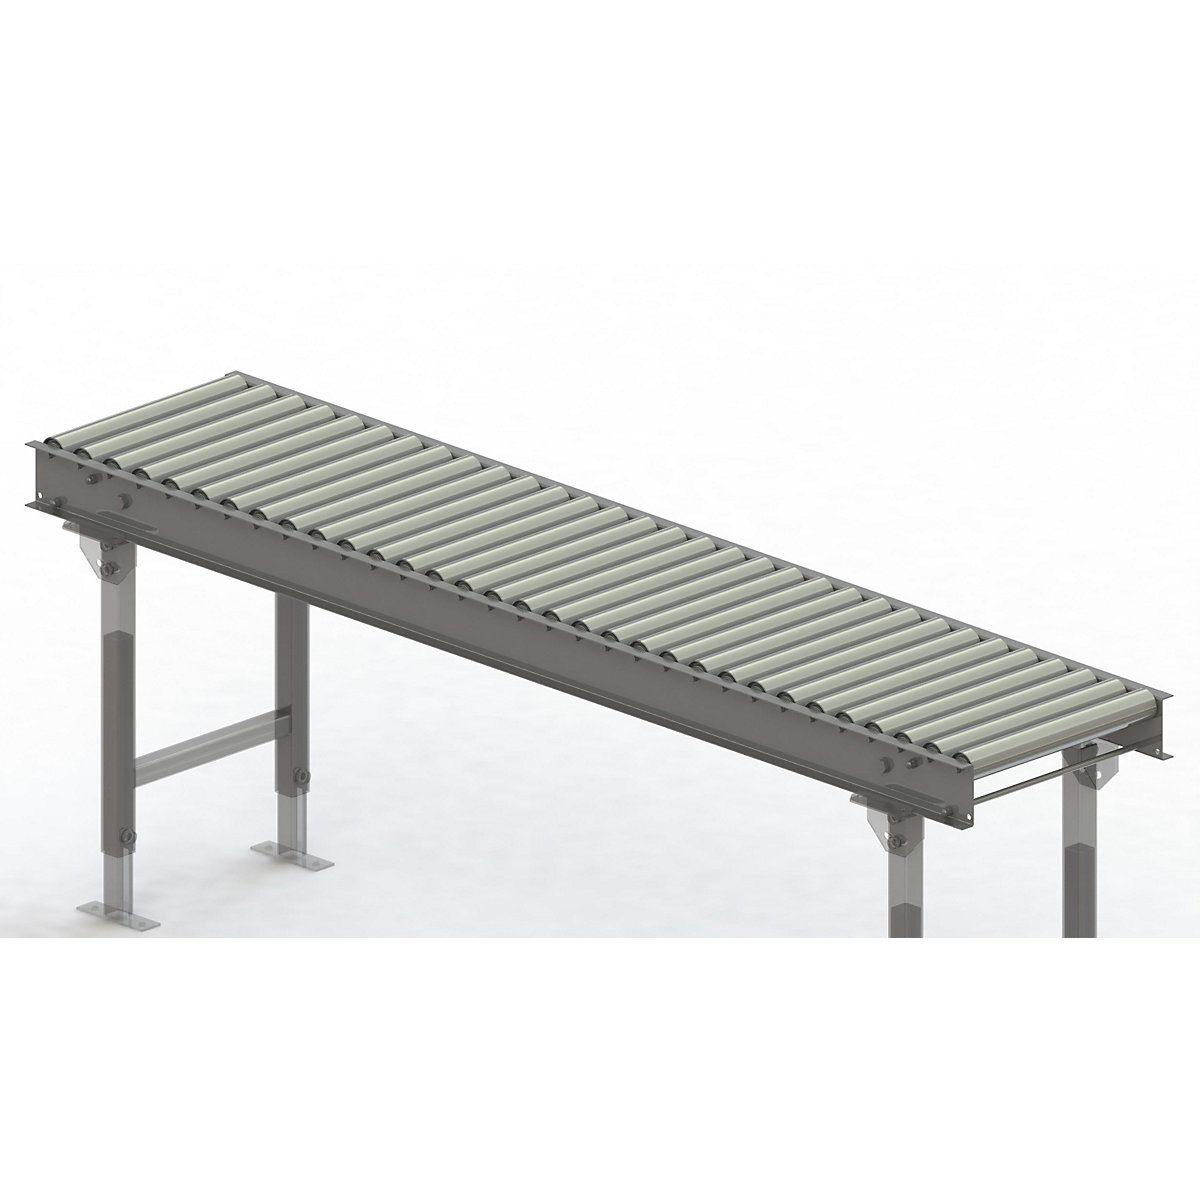 Gura – Roller conveyor, steel frame with zinc plated steel rollers, track width 400 mm, distance between axles 62.5 mm, length 2 m